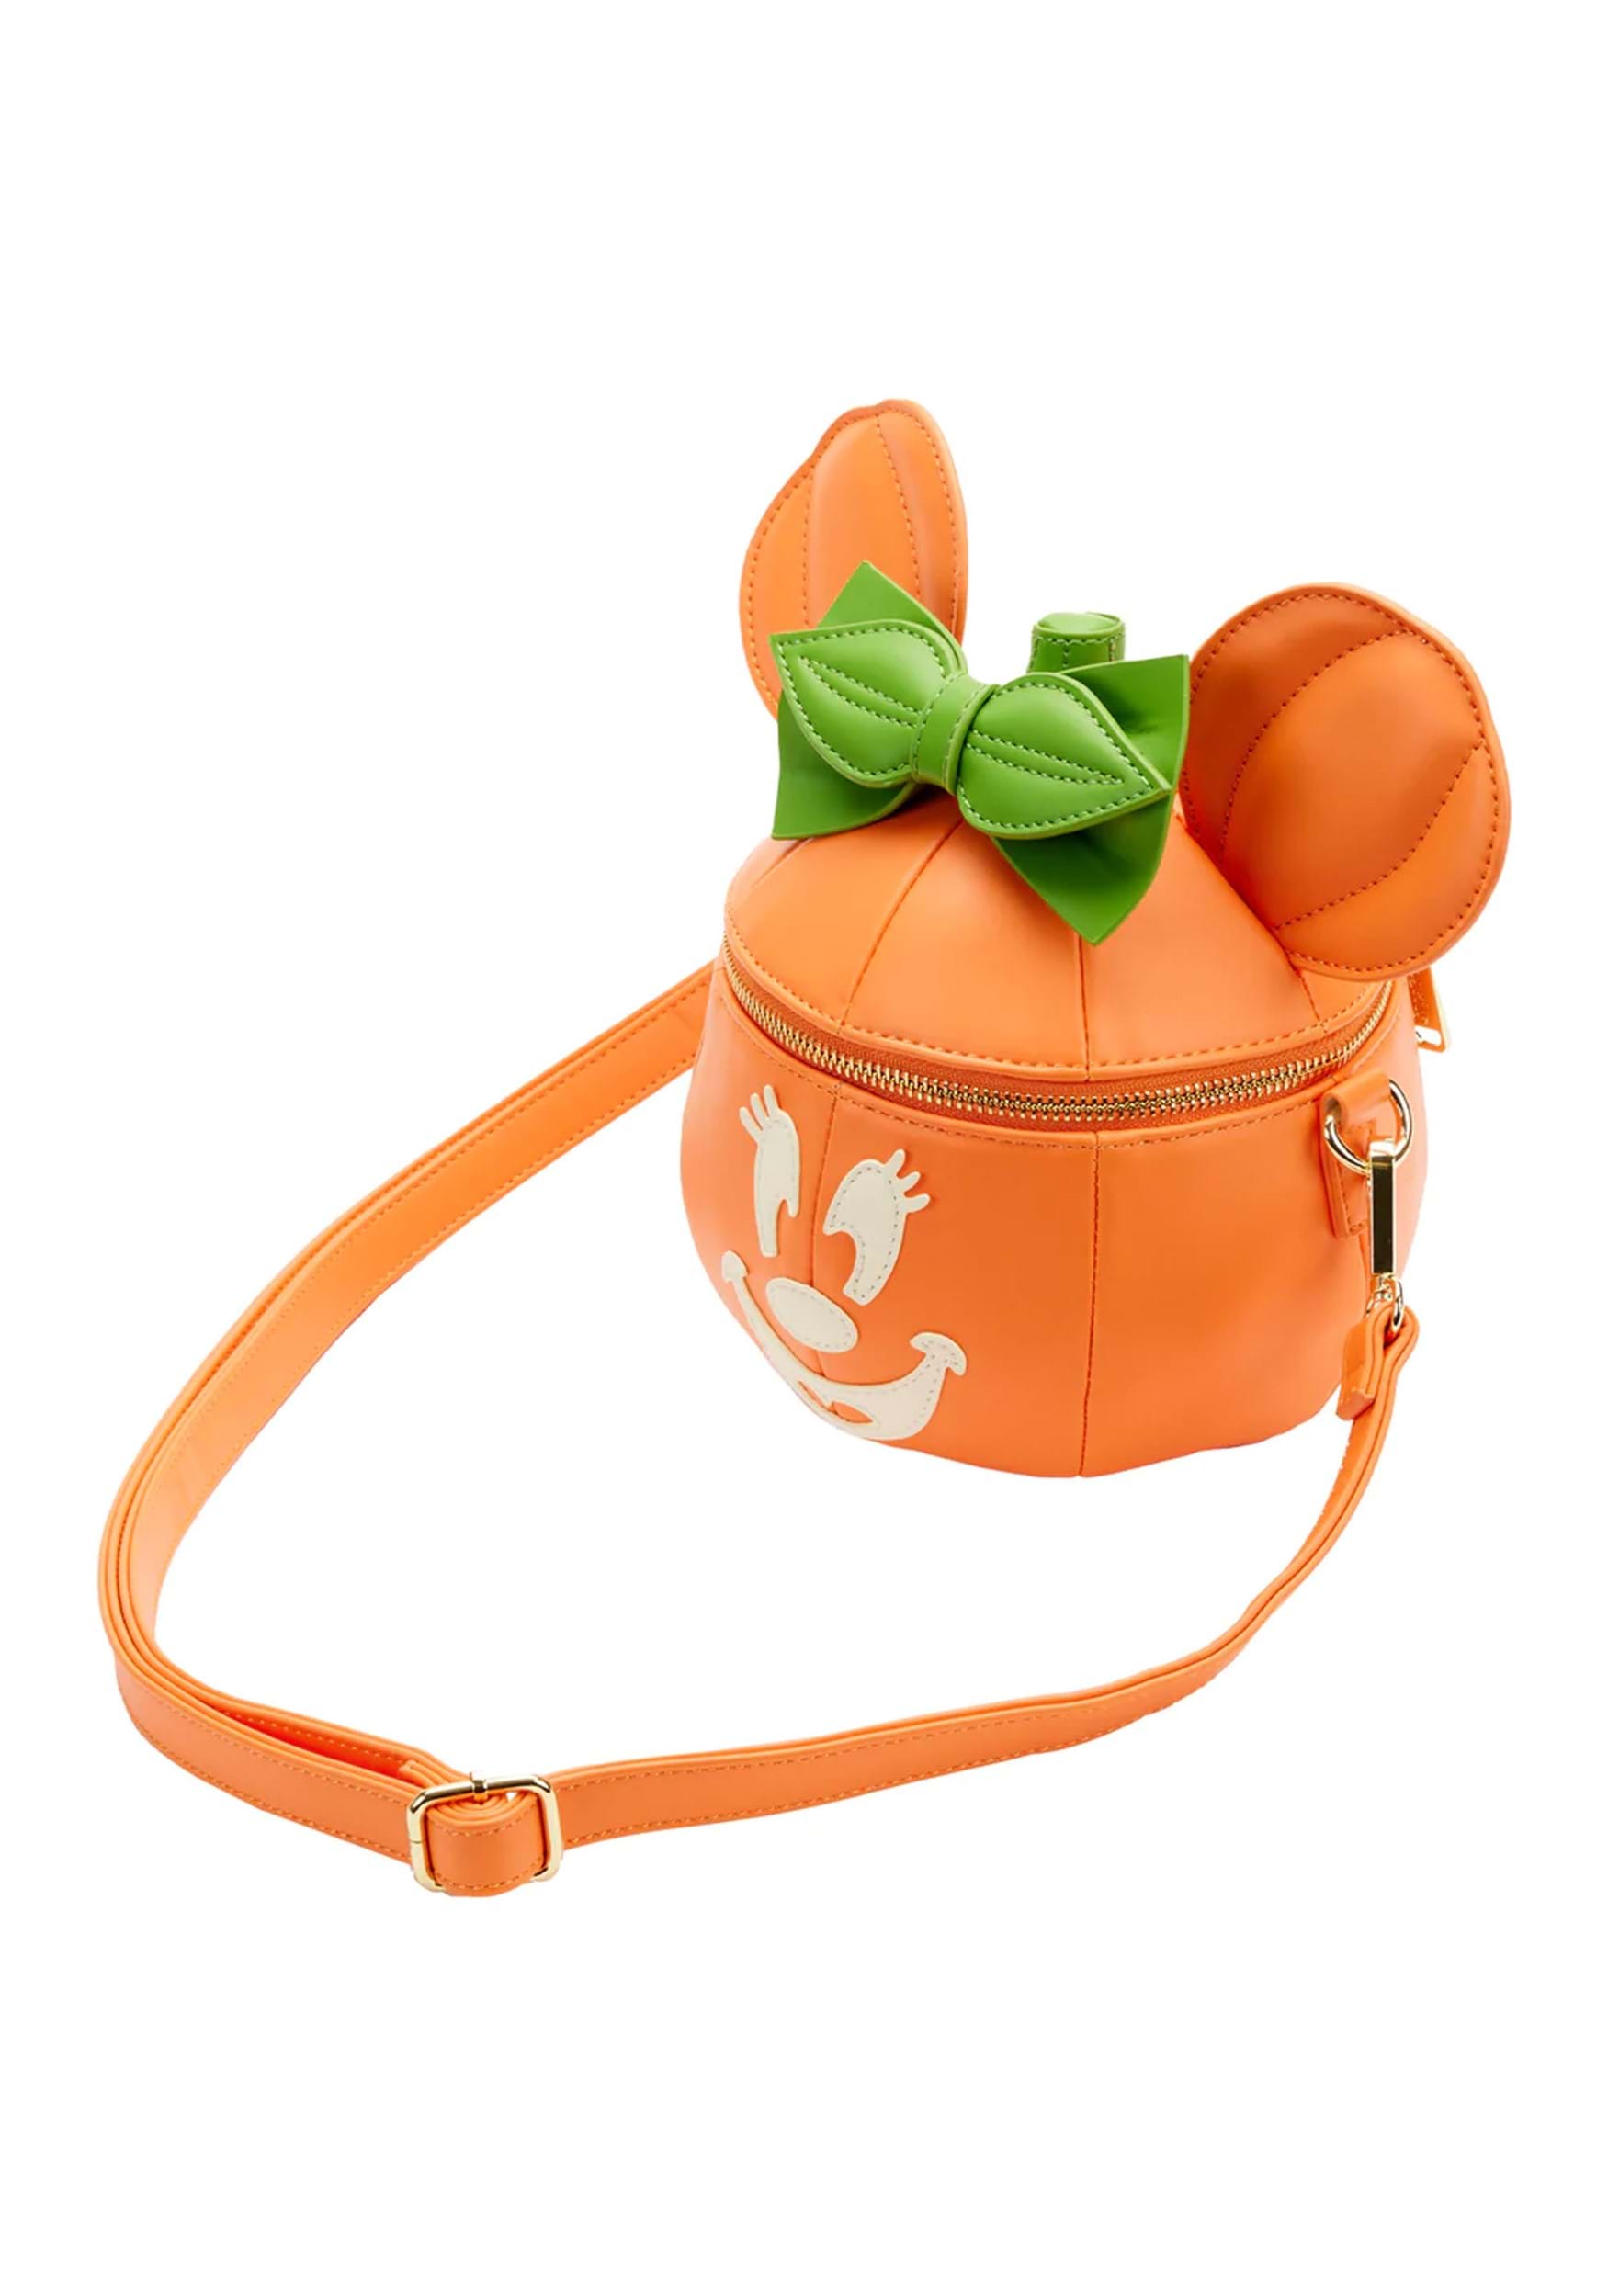 Disney Bag, Cross Body, Minnie Mouse Halloween Witch with Orange